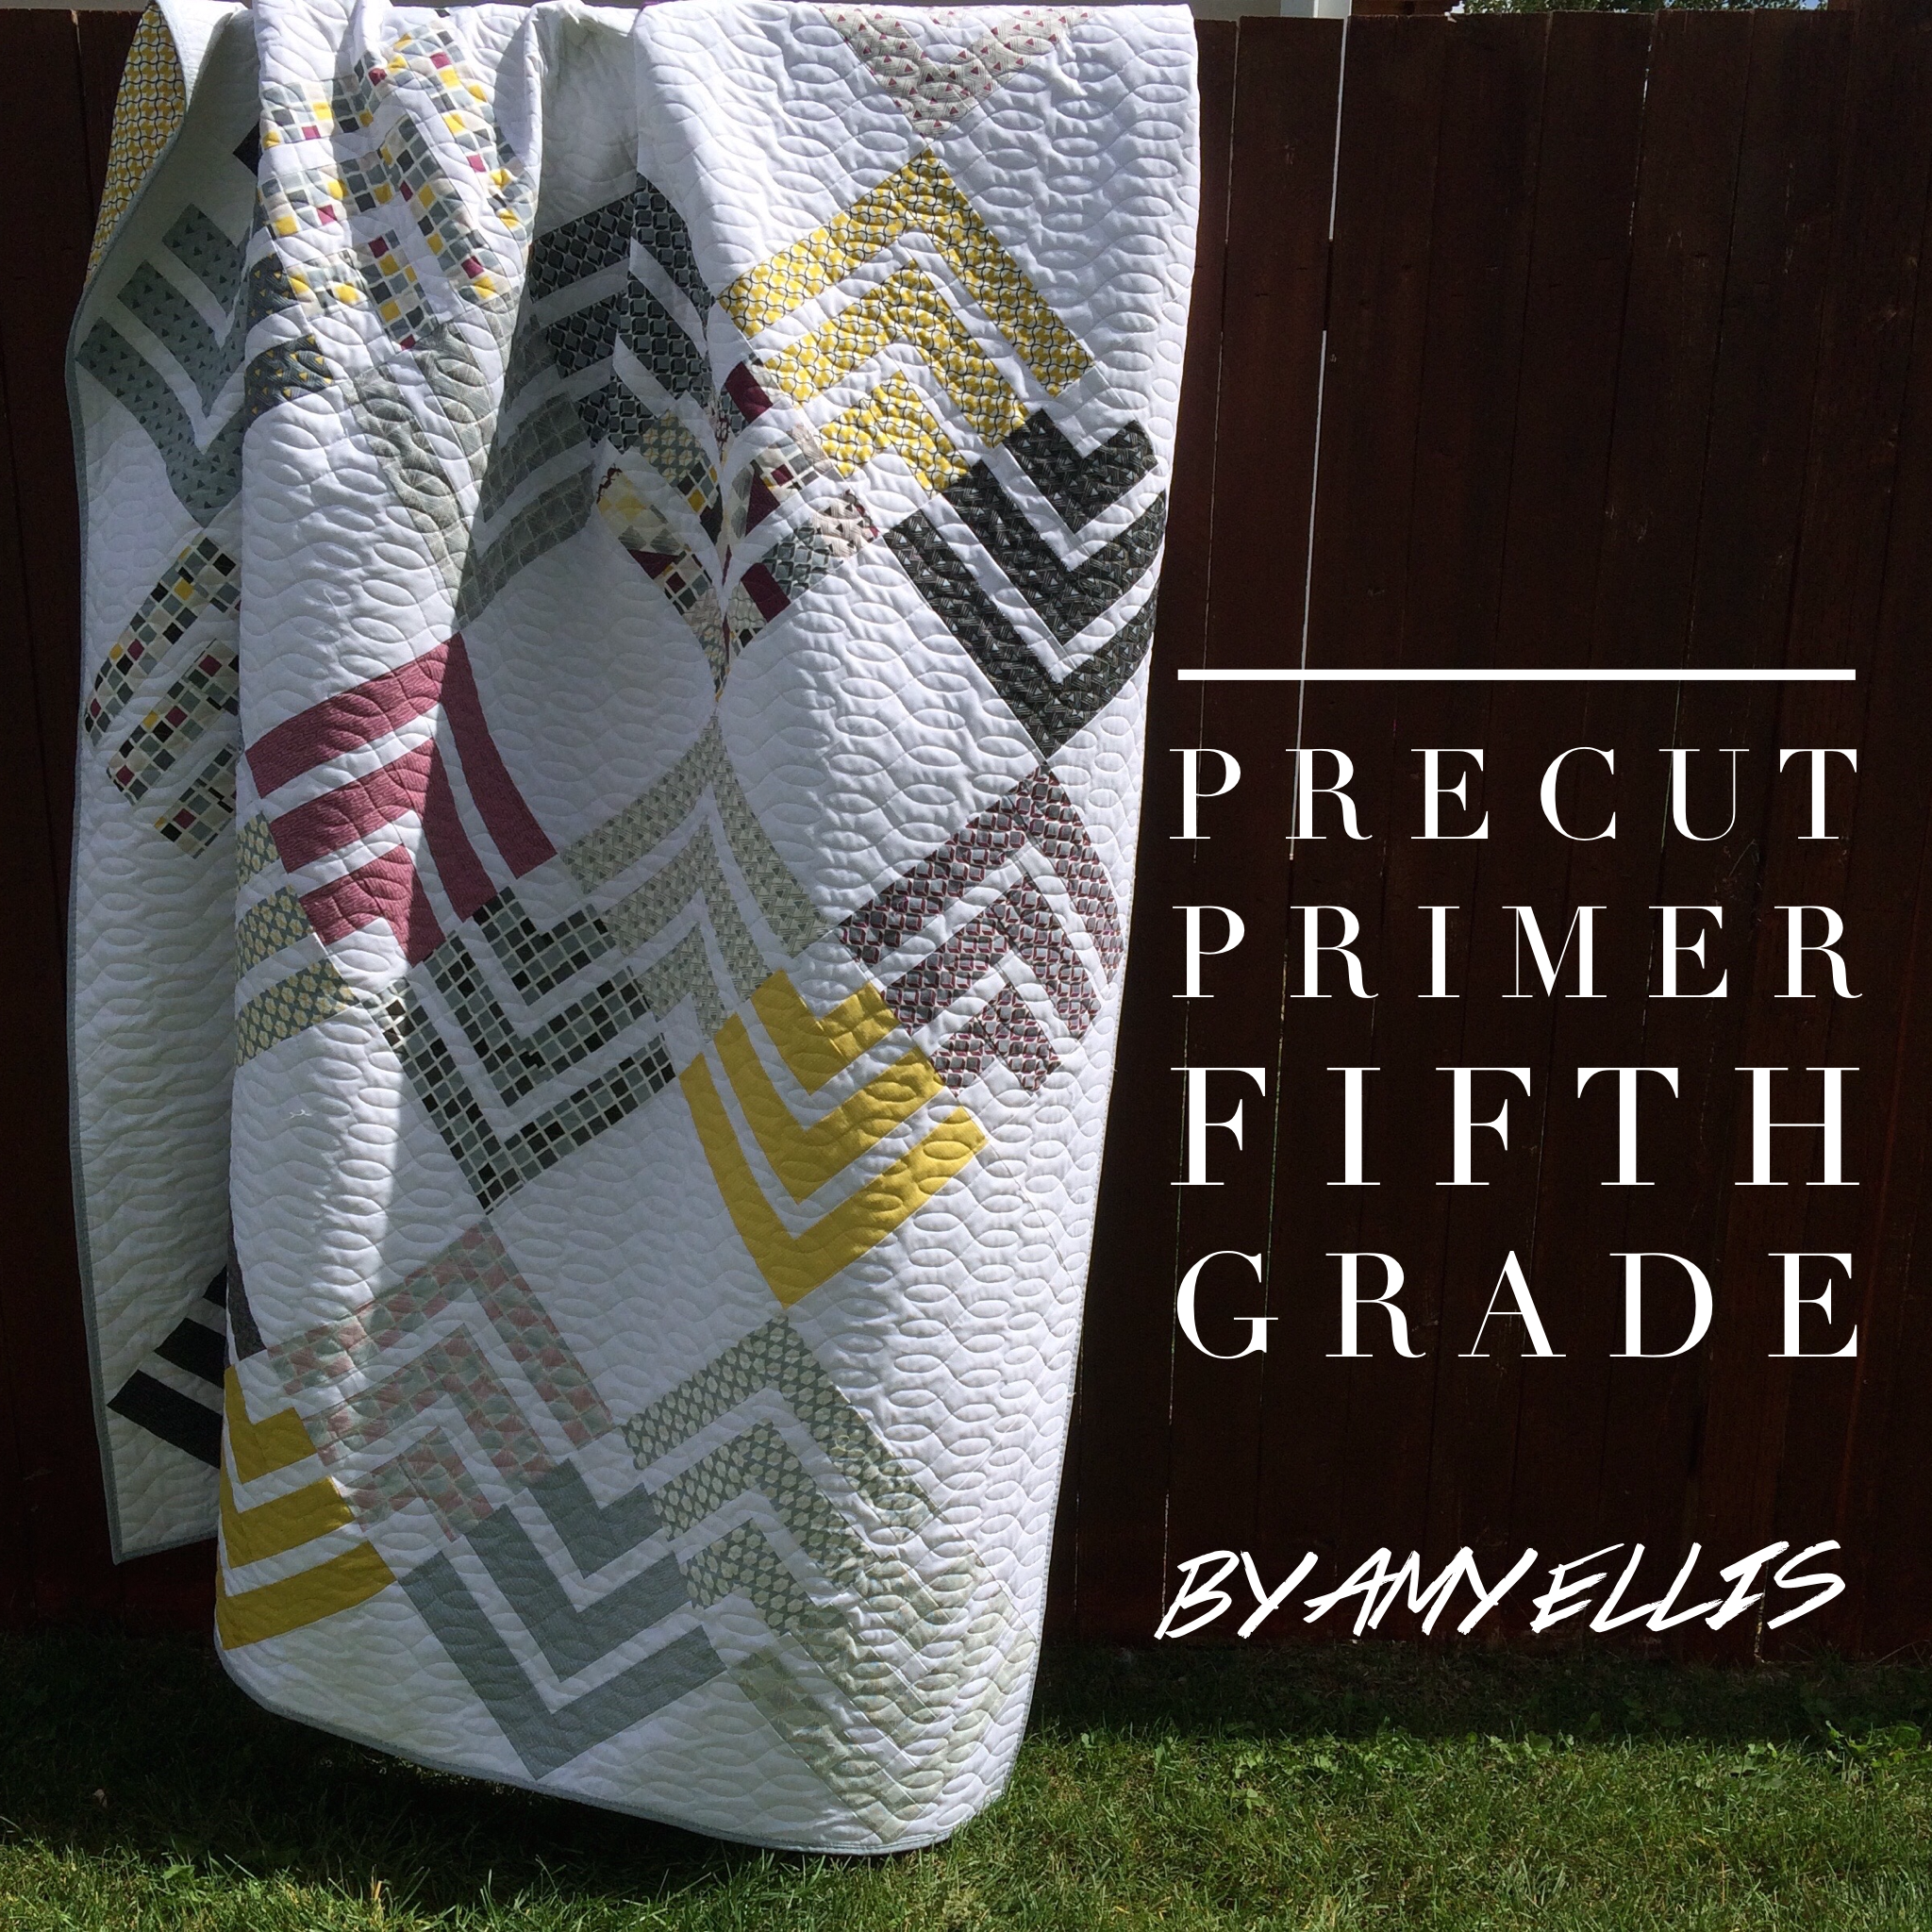 Precut Primer: Review & Giveaway!